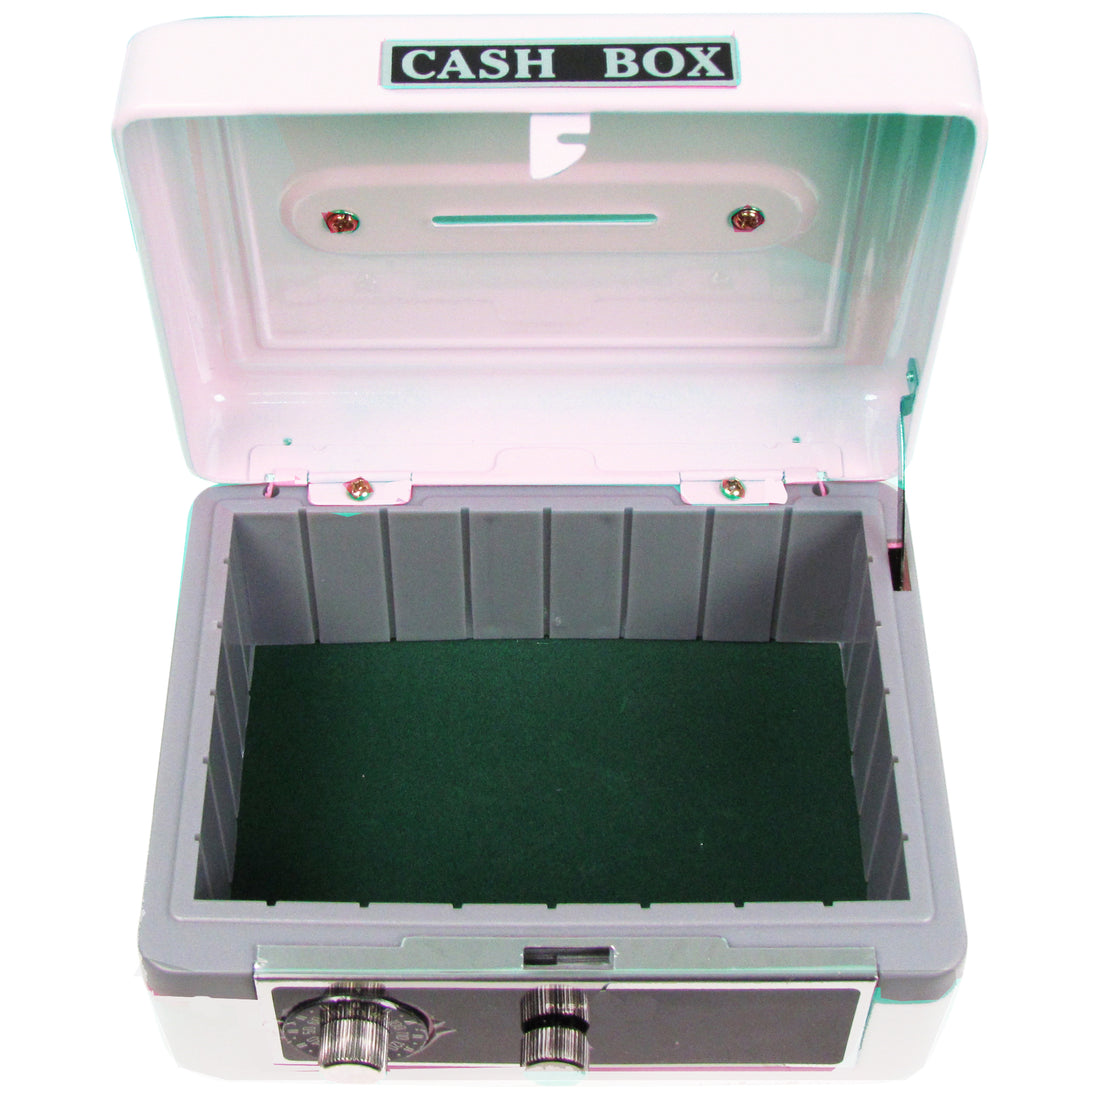 Personalized White Cash Box with Sea and Marine design